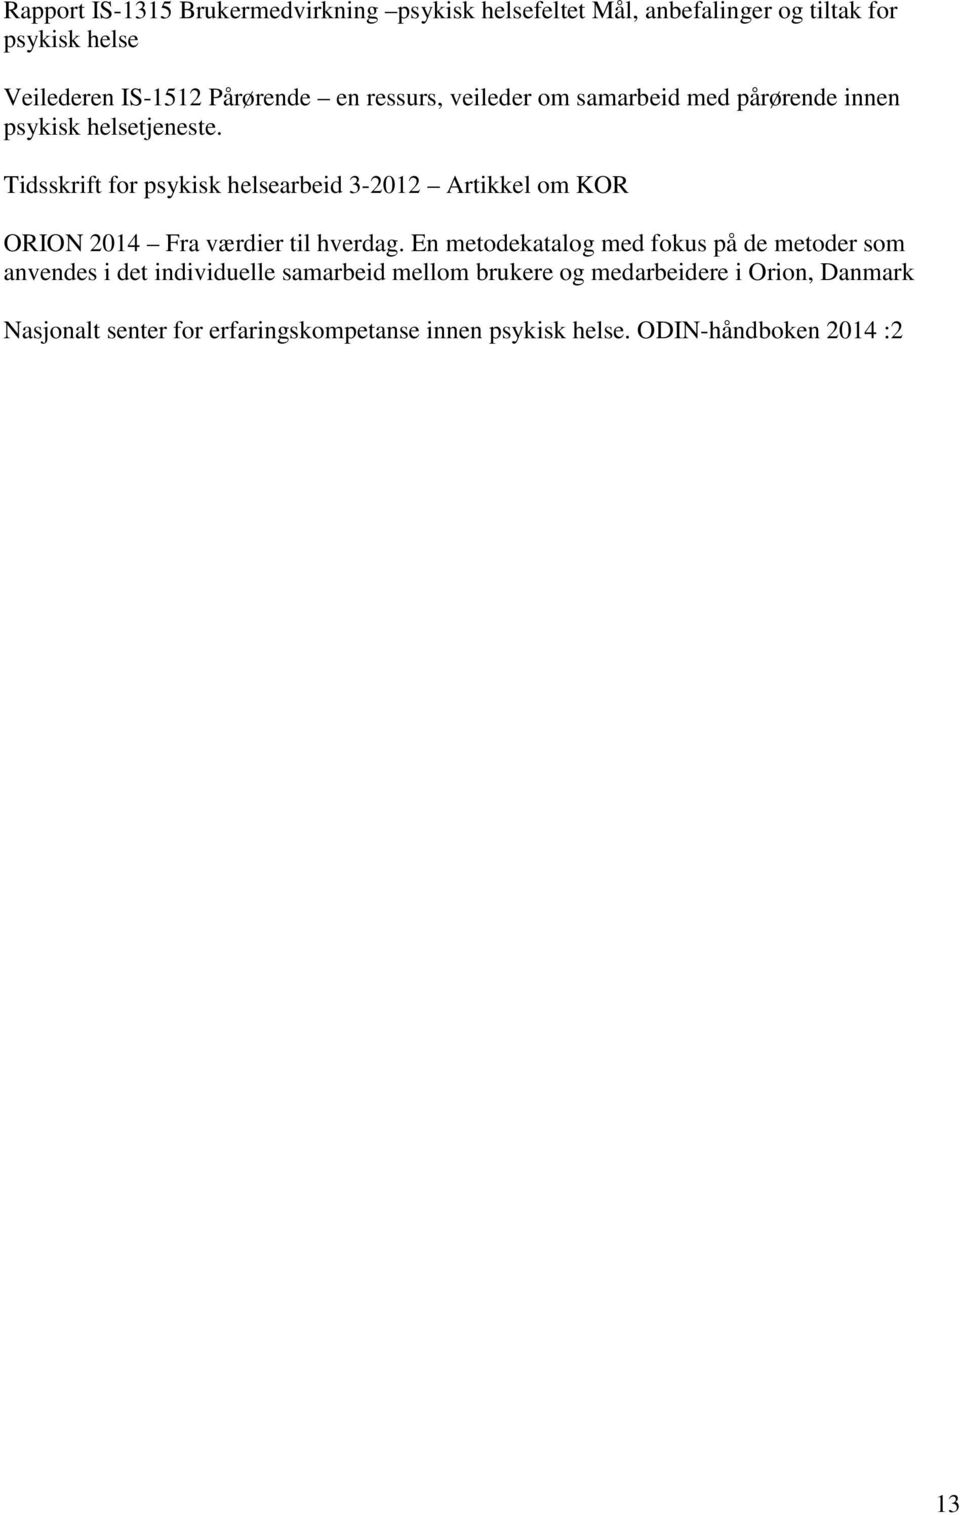 Tidsskrift for psykisk helsearbeid 3-2012 Artikkel om KOR ORION 2014 Fra værdier til hverdag.